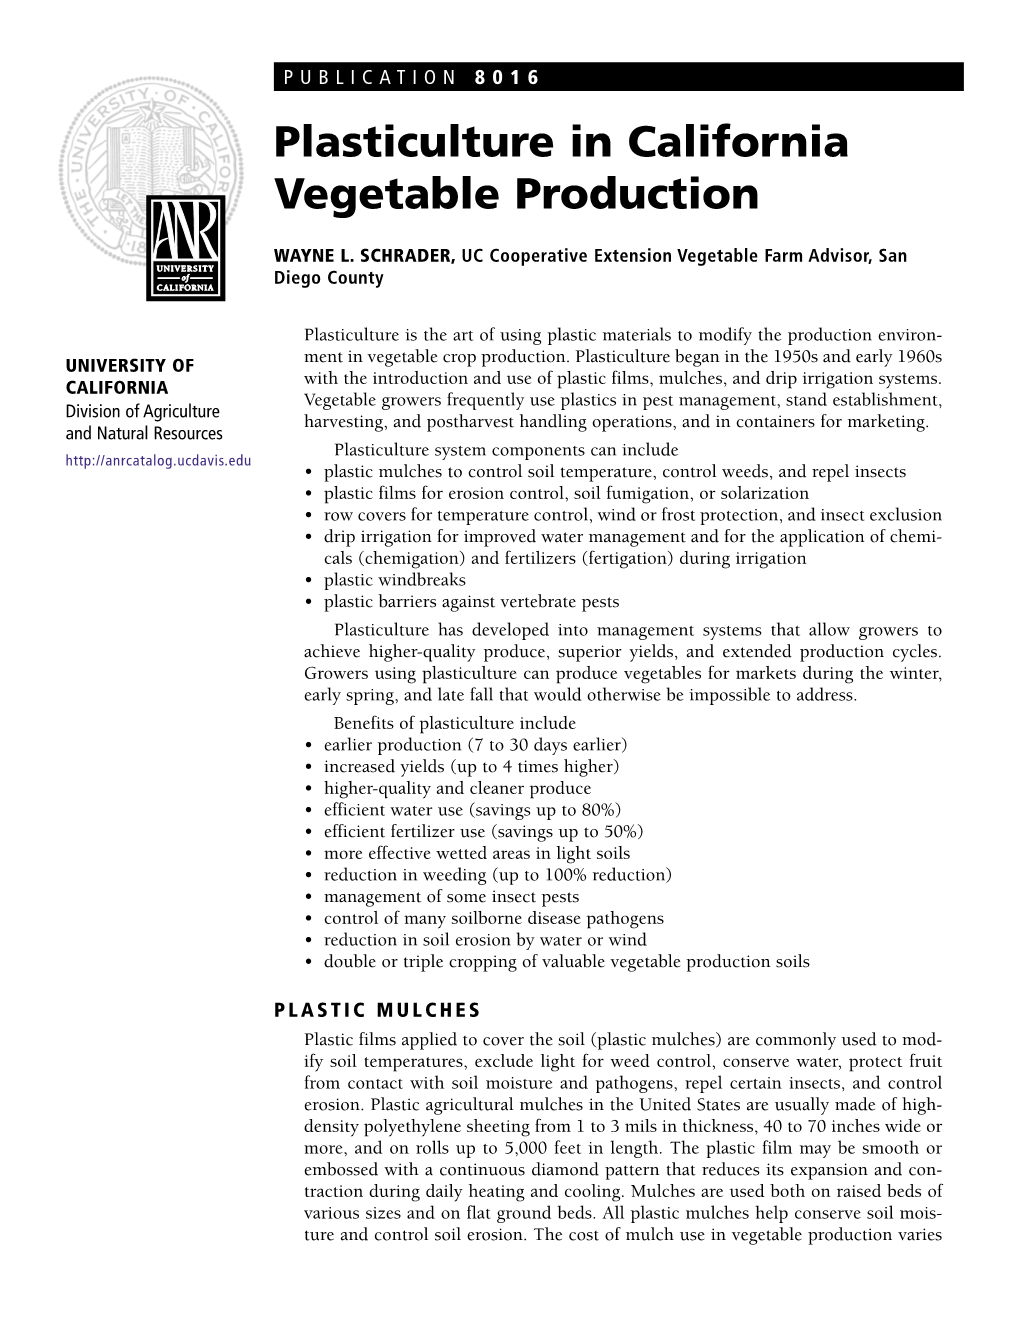 Plasticulture in California Vegetable Production